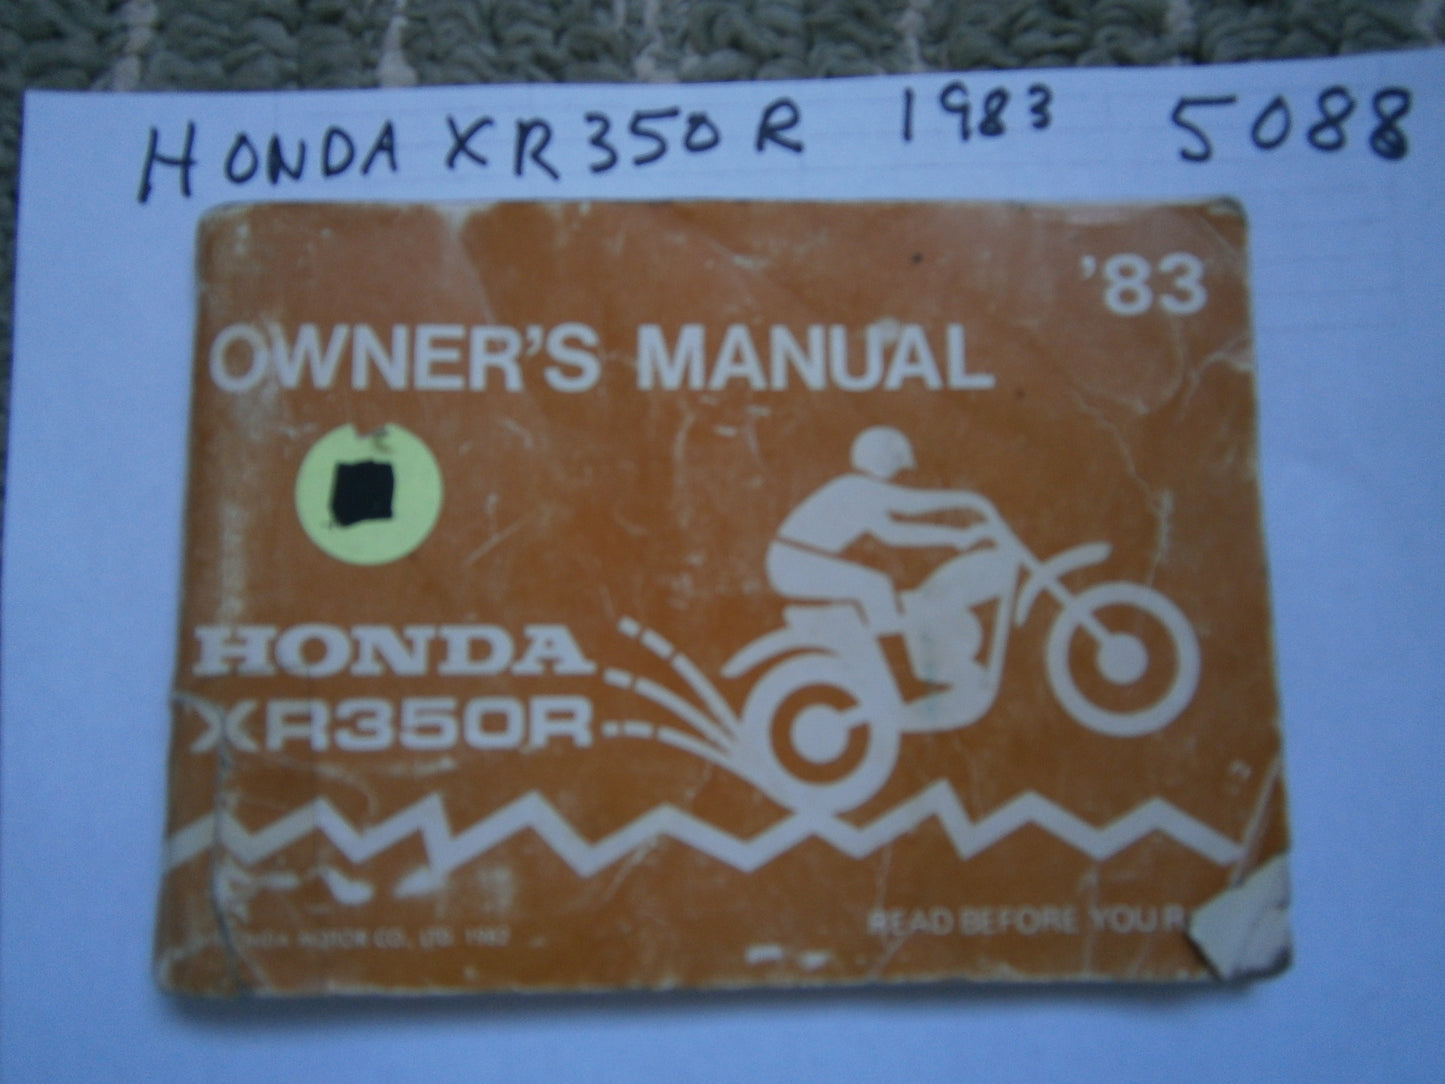 Honda XR350R Owners Manual 5088